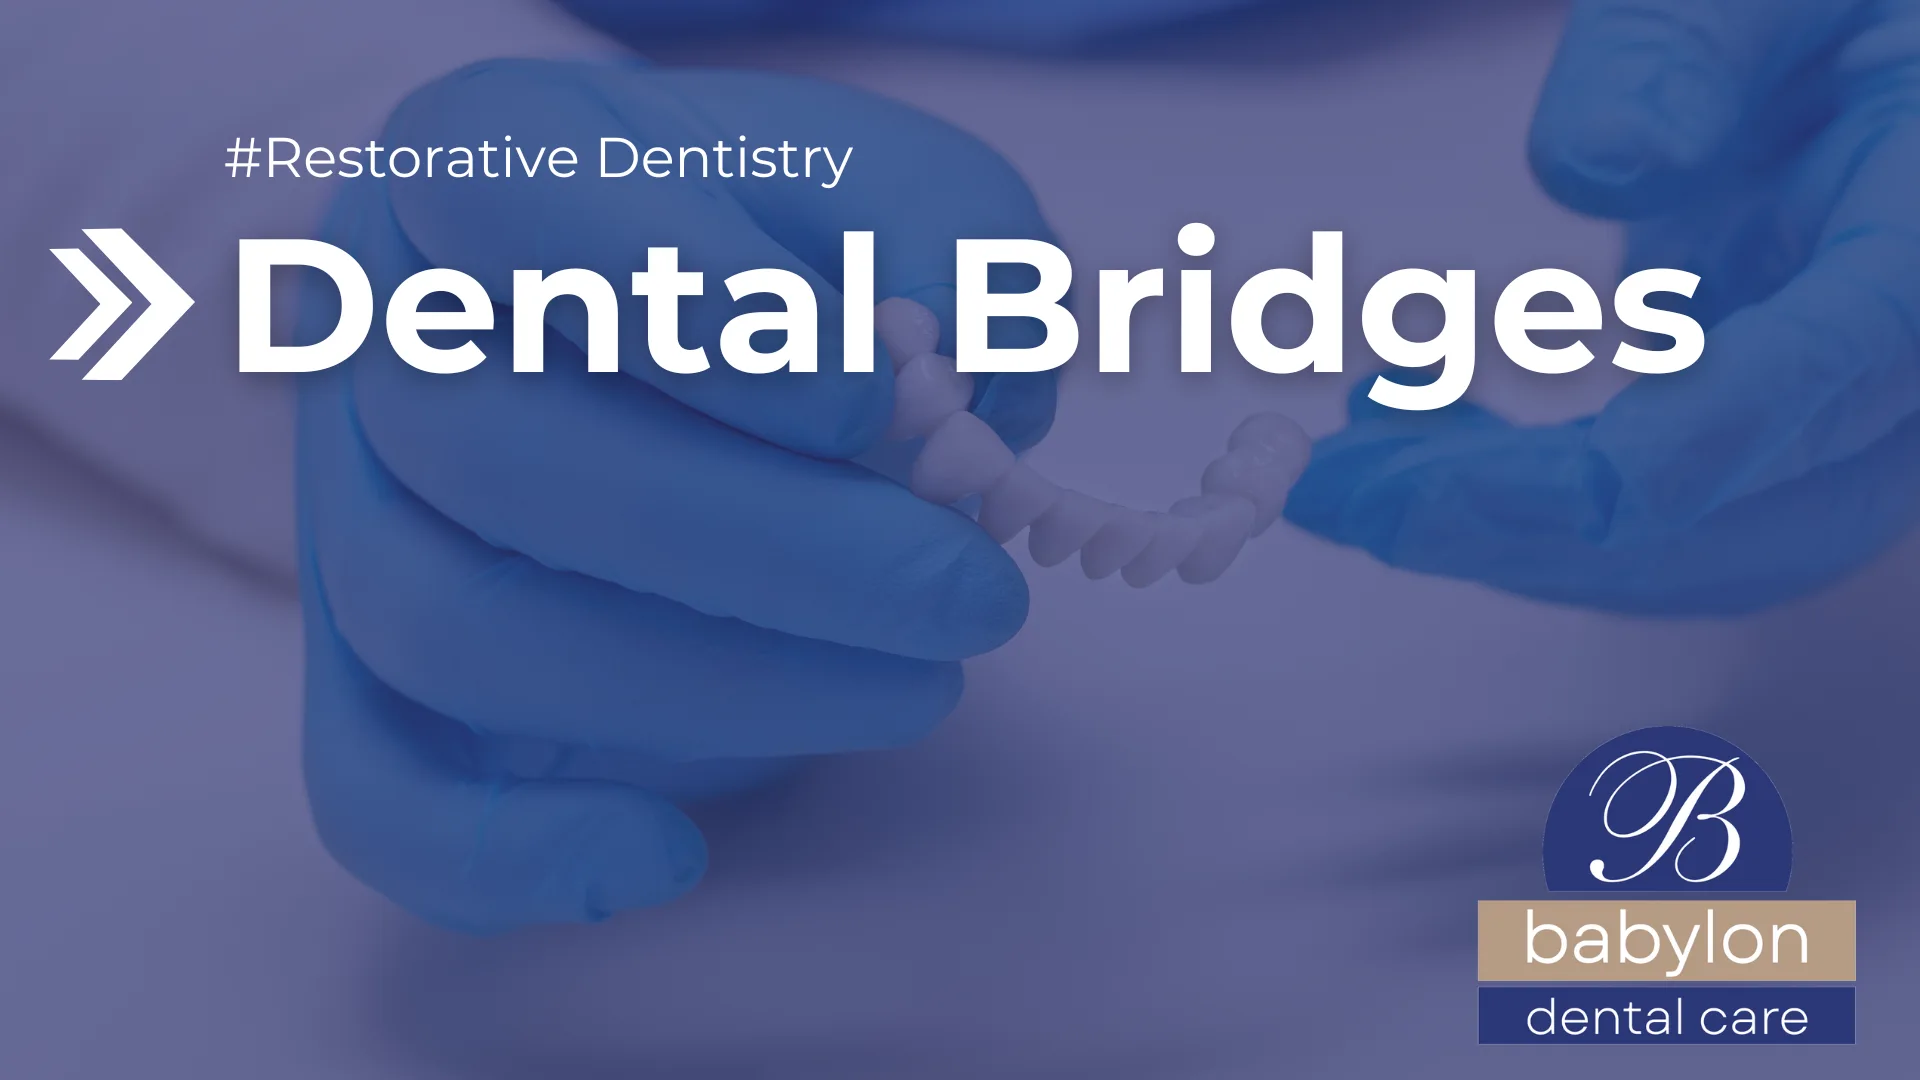 Dental Bridges Image - new logo